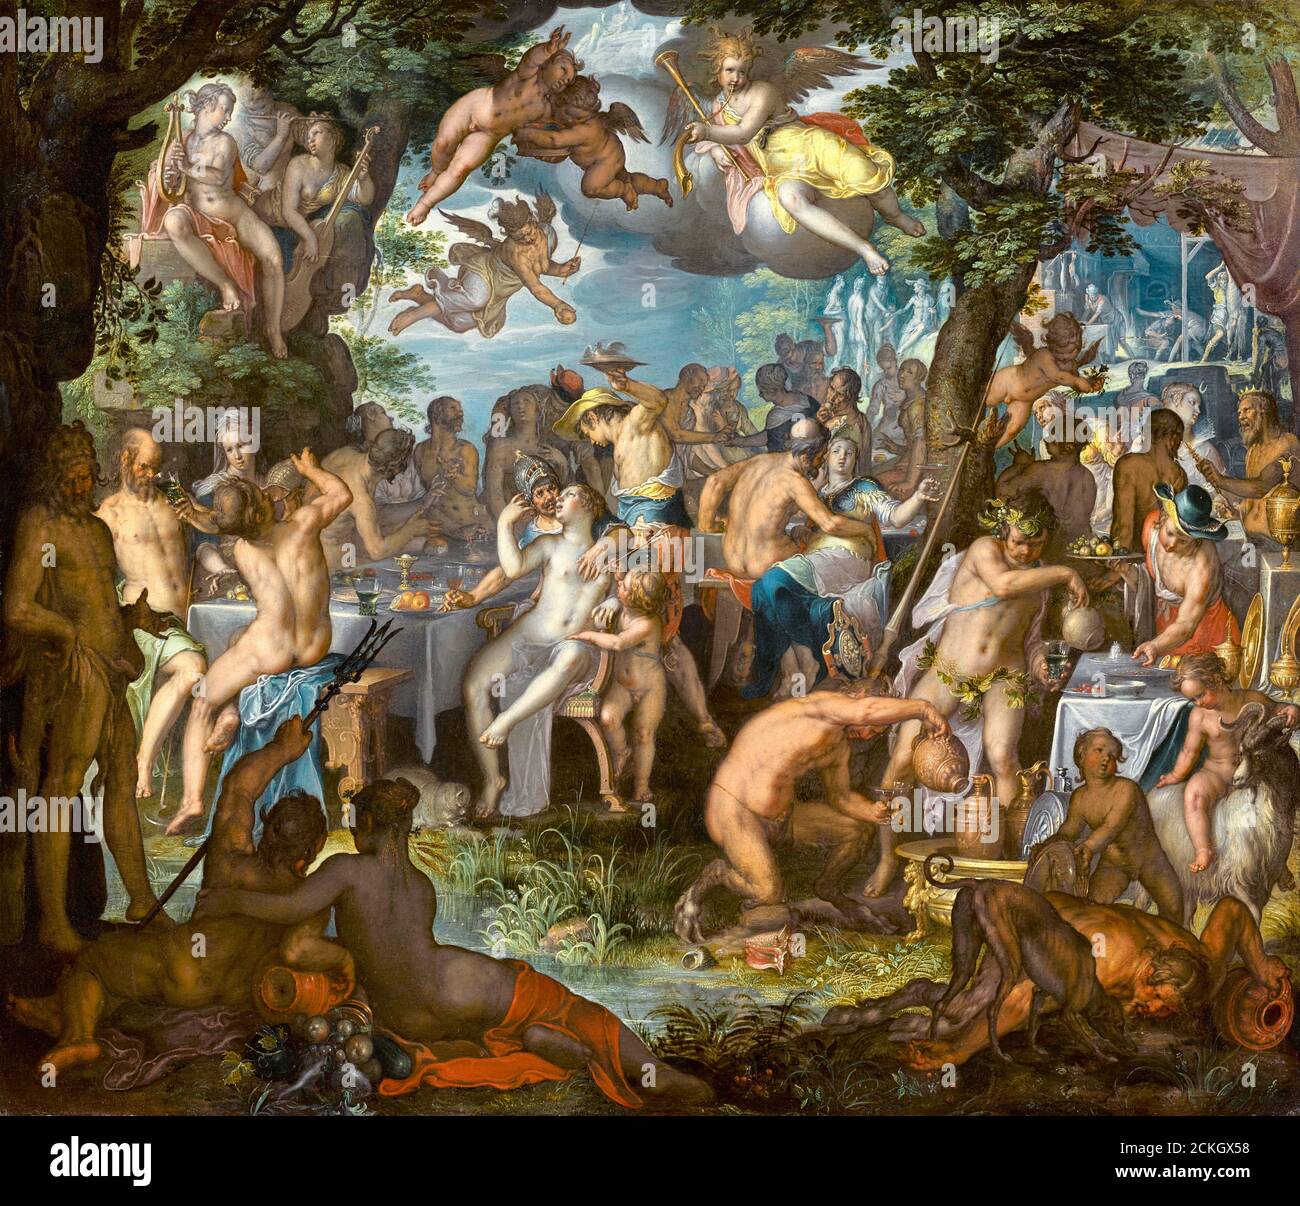 The wedding of Peleus and Thetis, painting by Joachim Anthonisz Wtewael, 1612 Stock Photo